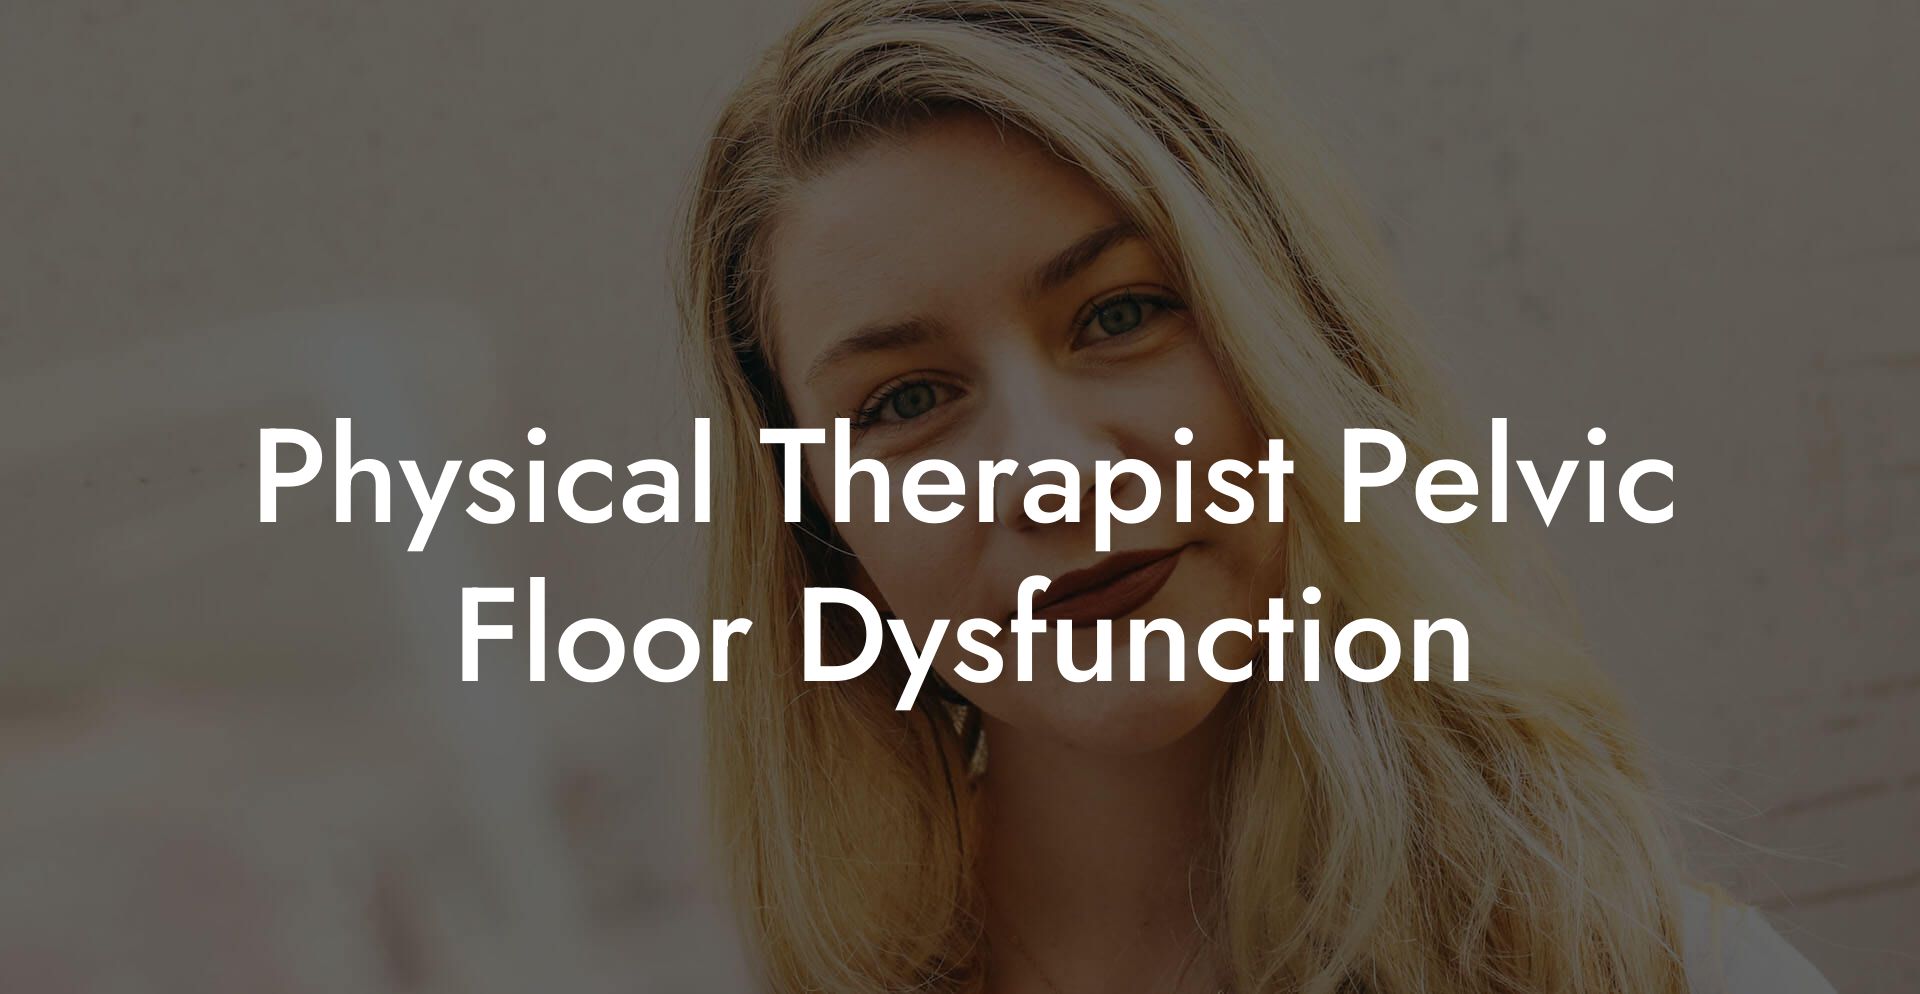 Physical Therapist Pelvic Floor Dysfunction